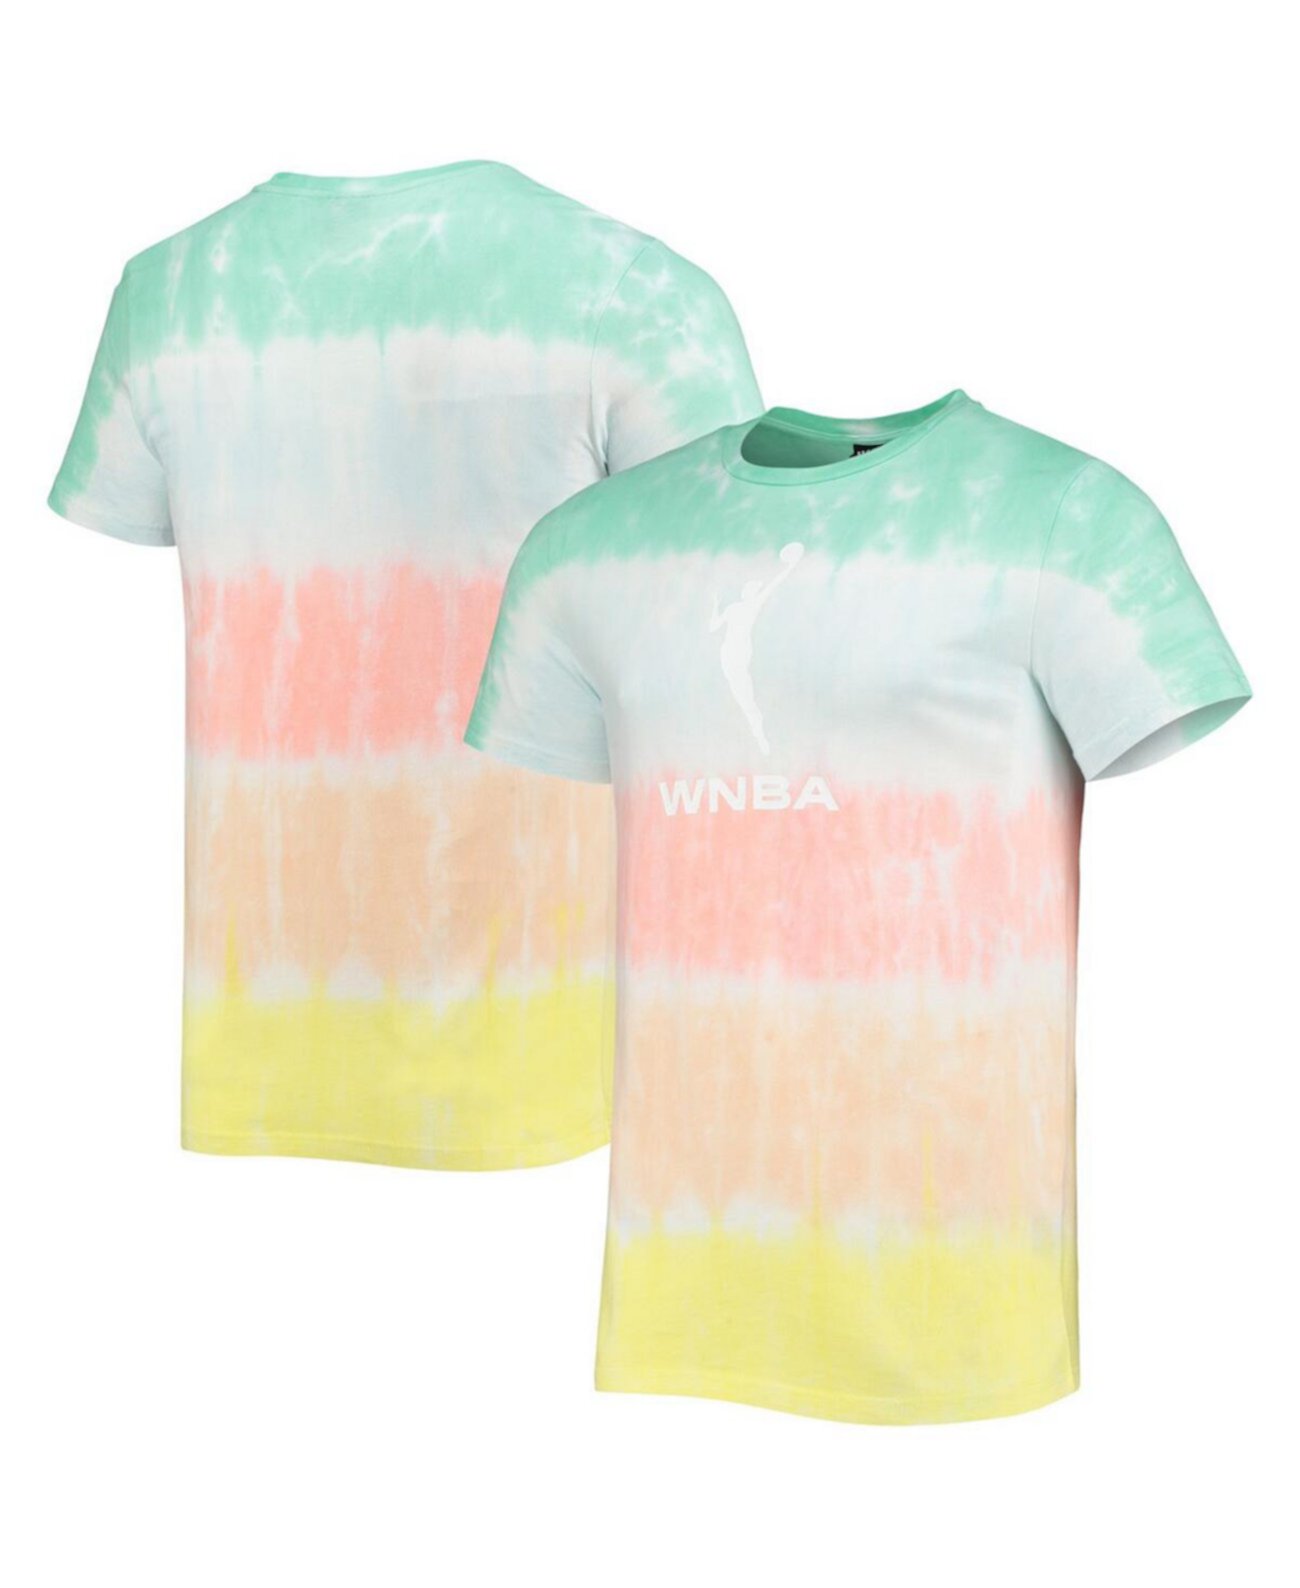 Мужская футболка мятно-кораллового цвета с логотипом WNBA Pride Tie Dye The Wild Collective